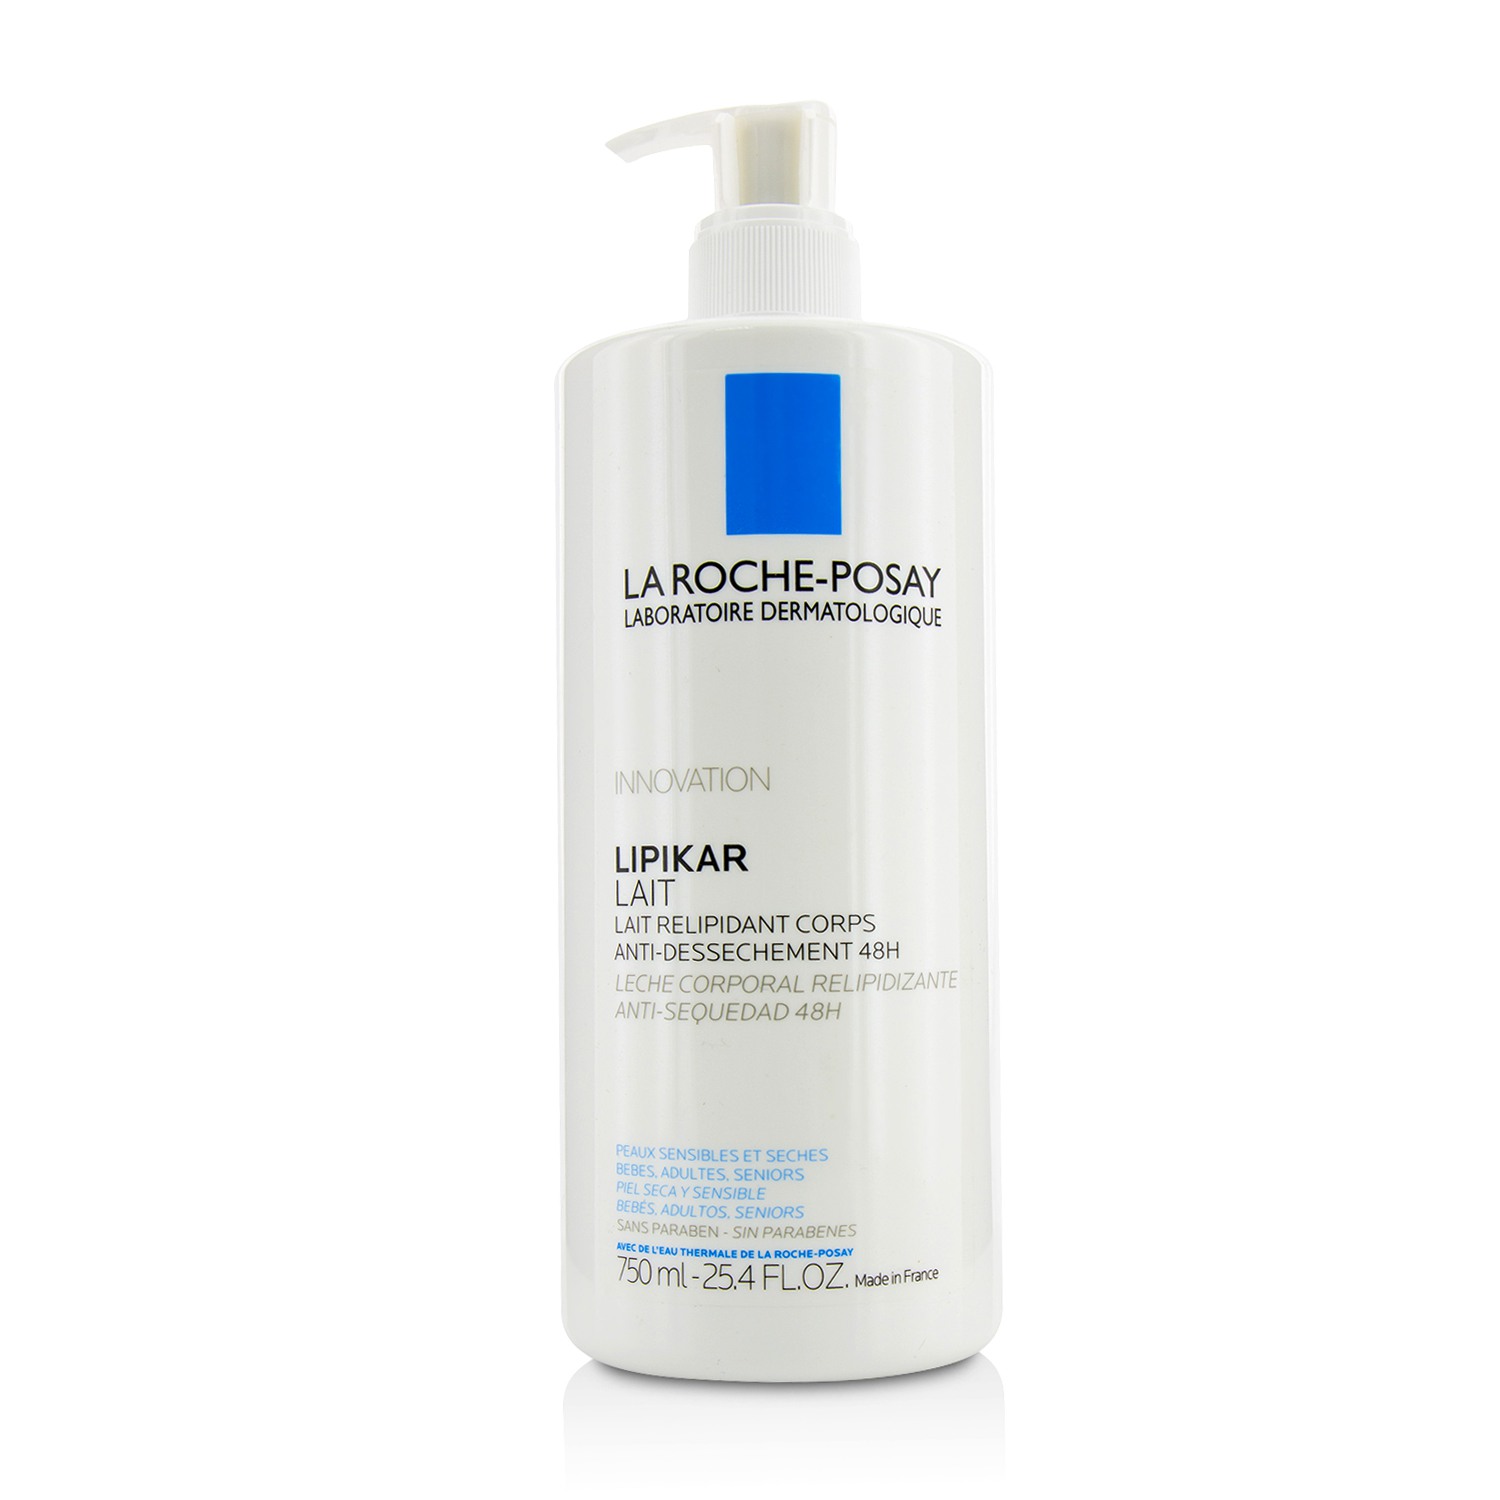 Lipikar Lait Lipid-Replenishing Body Milk La Roche Posay Image